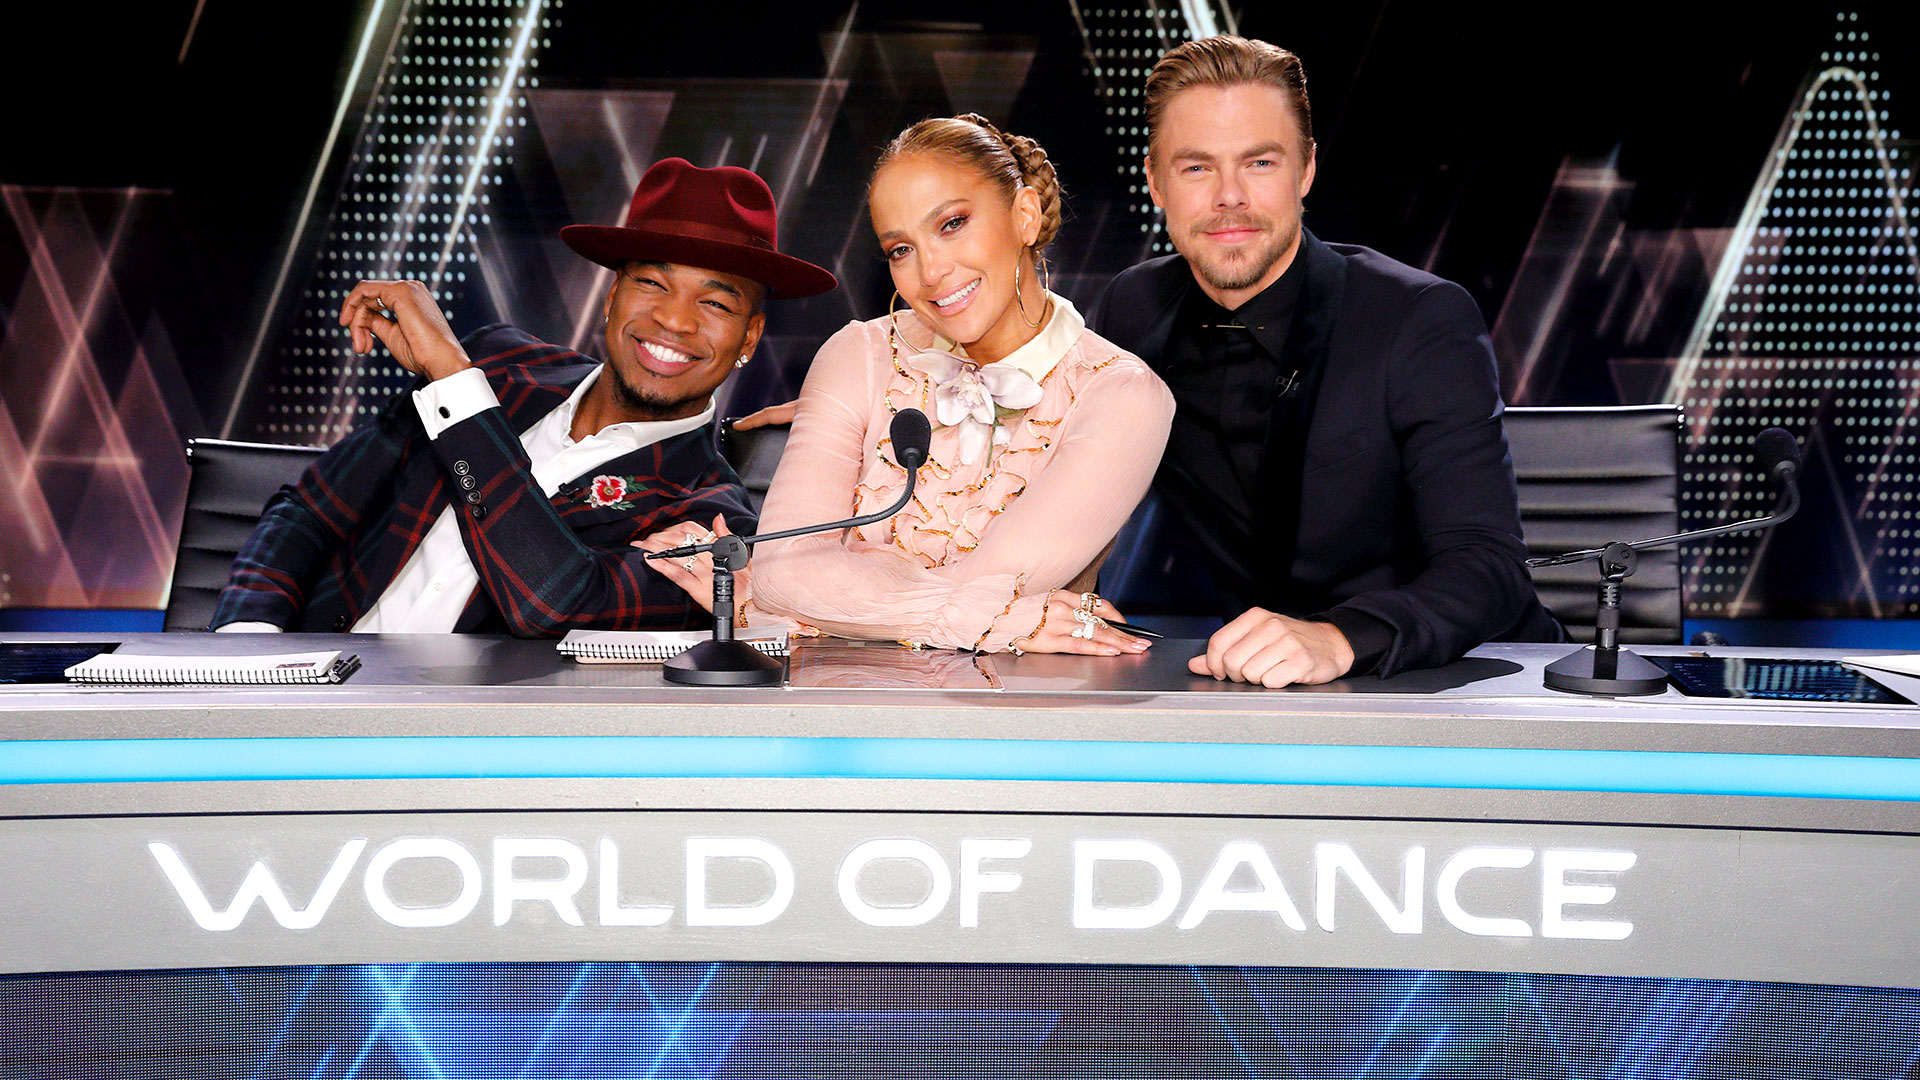 Watch World of Dance Episode: The Qualifiers 1 - NBC.com1920 x 1080